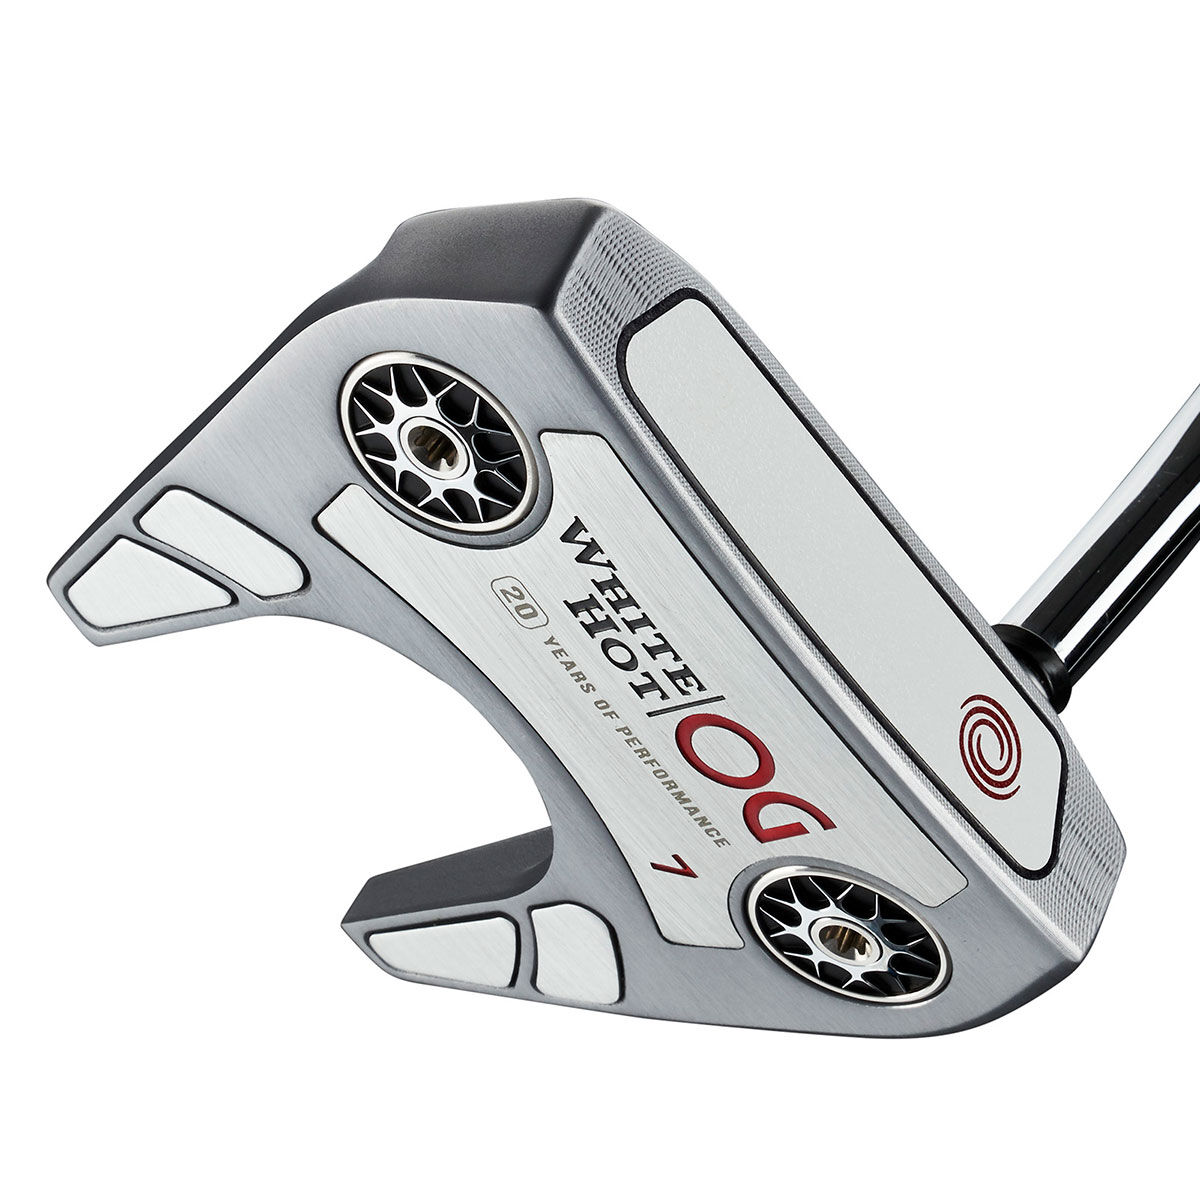 Golf Putter Odyssey White Hot OG 7 OS, homme, Main Gauche, 34 pouces | Online Golf